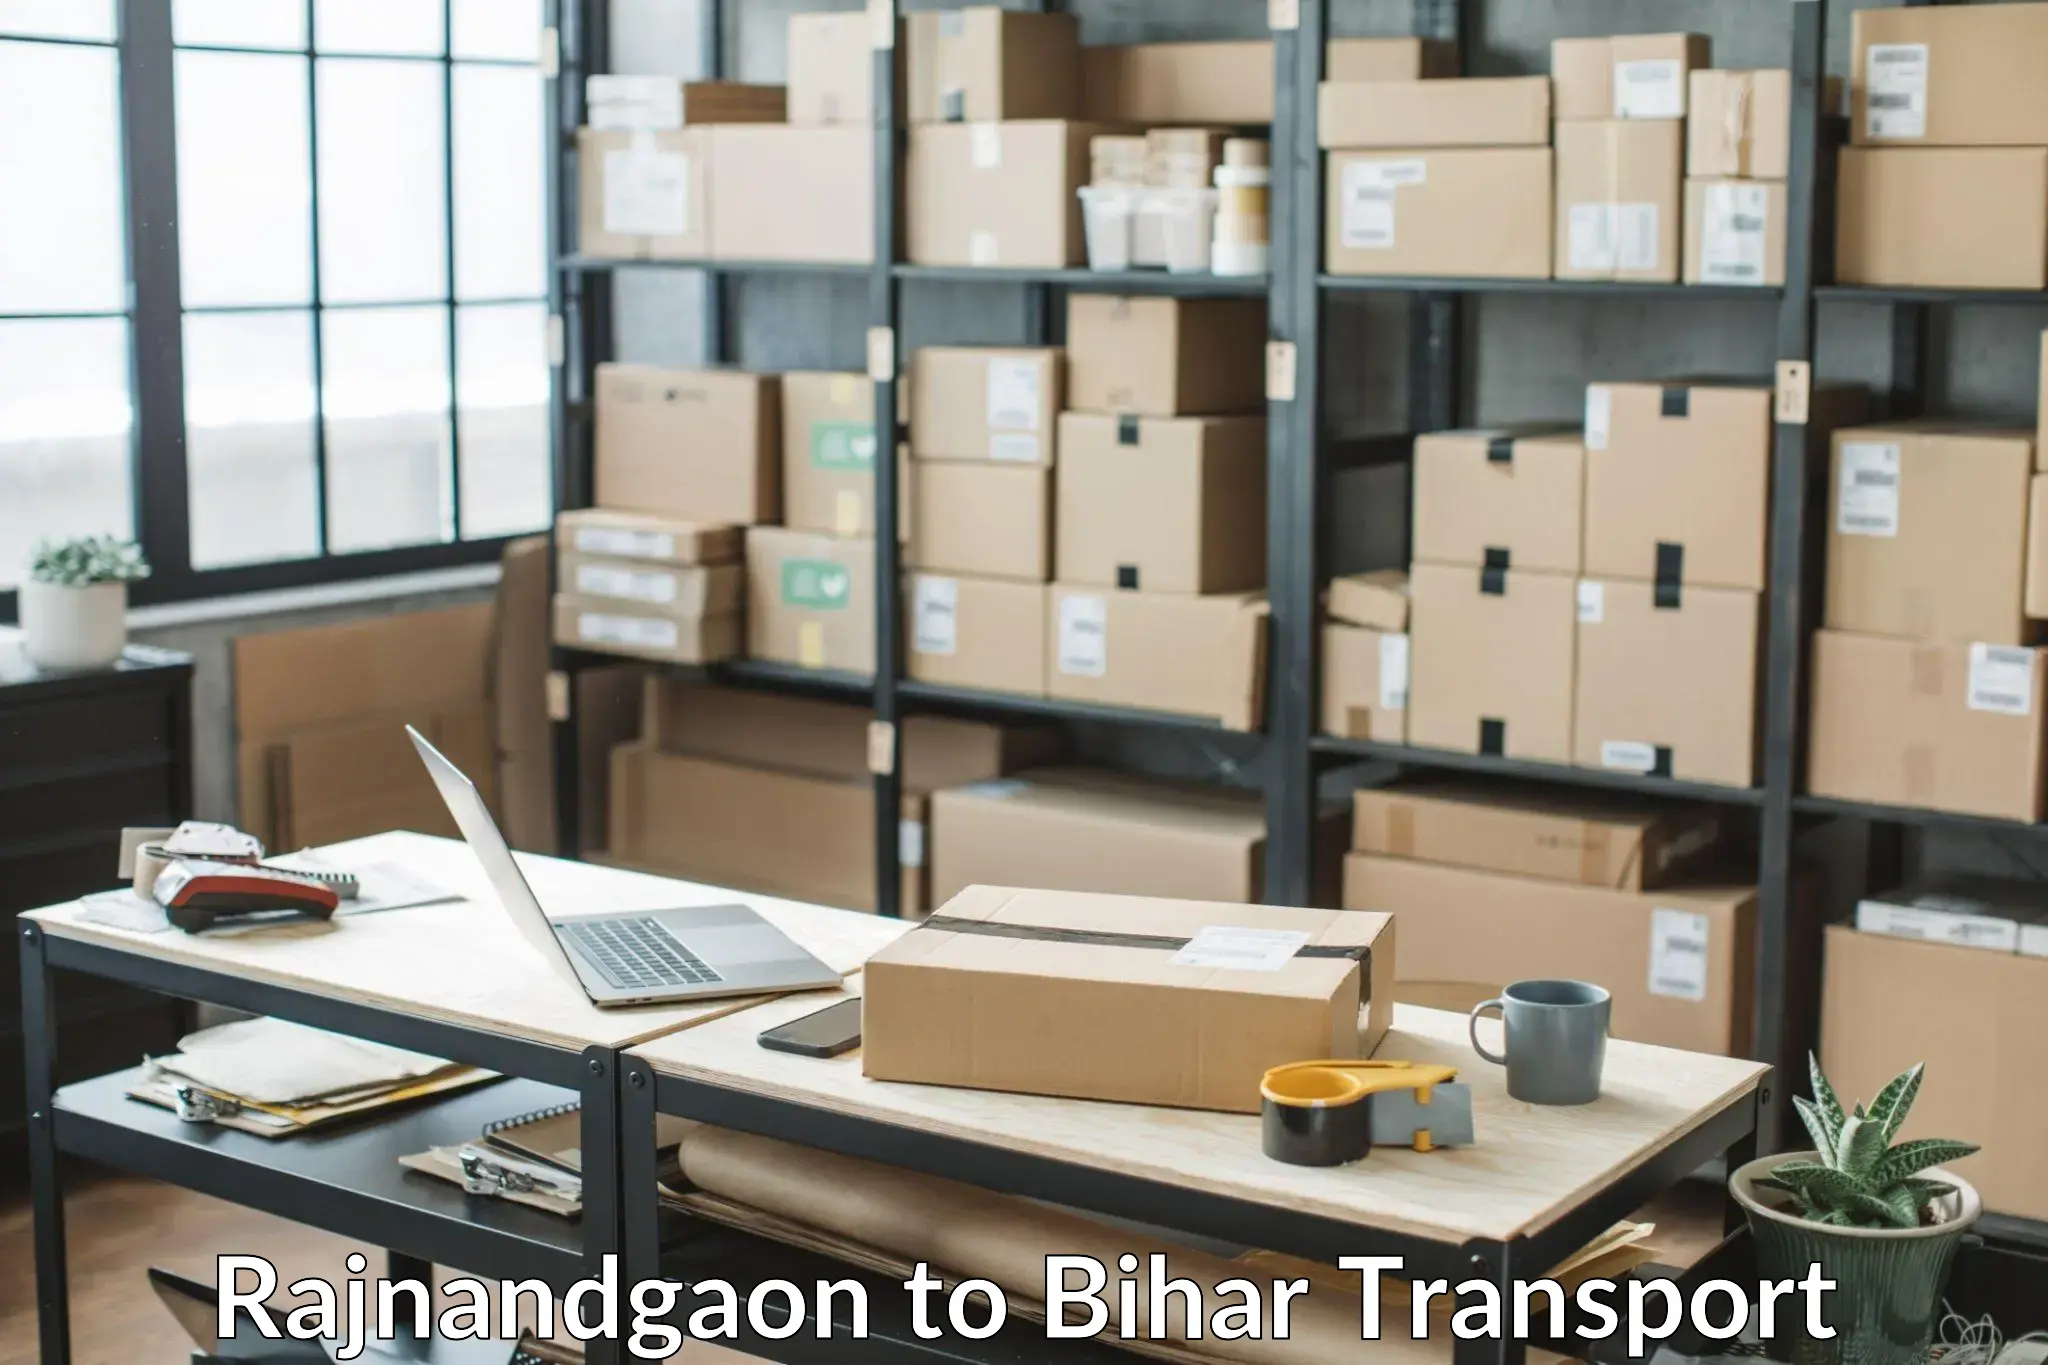 Shipping partner Rajnandgaon to Bihta